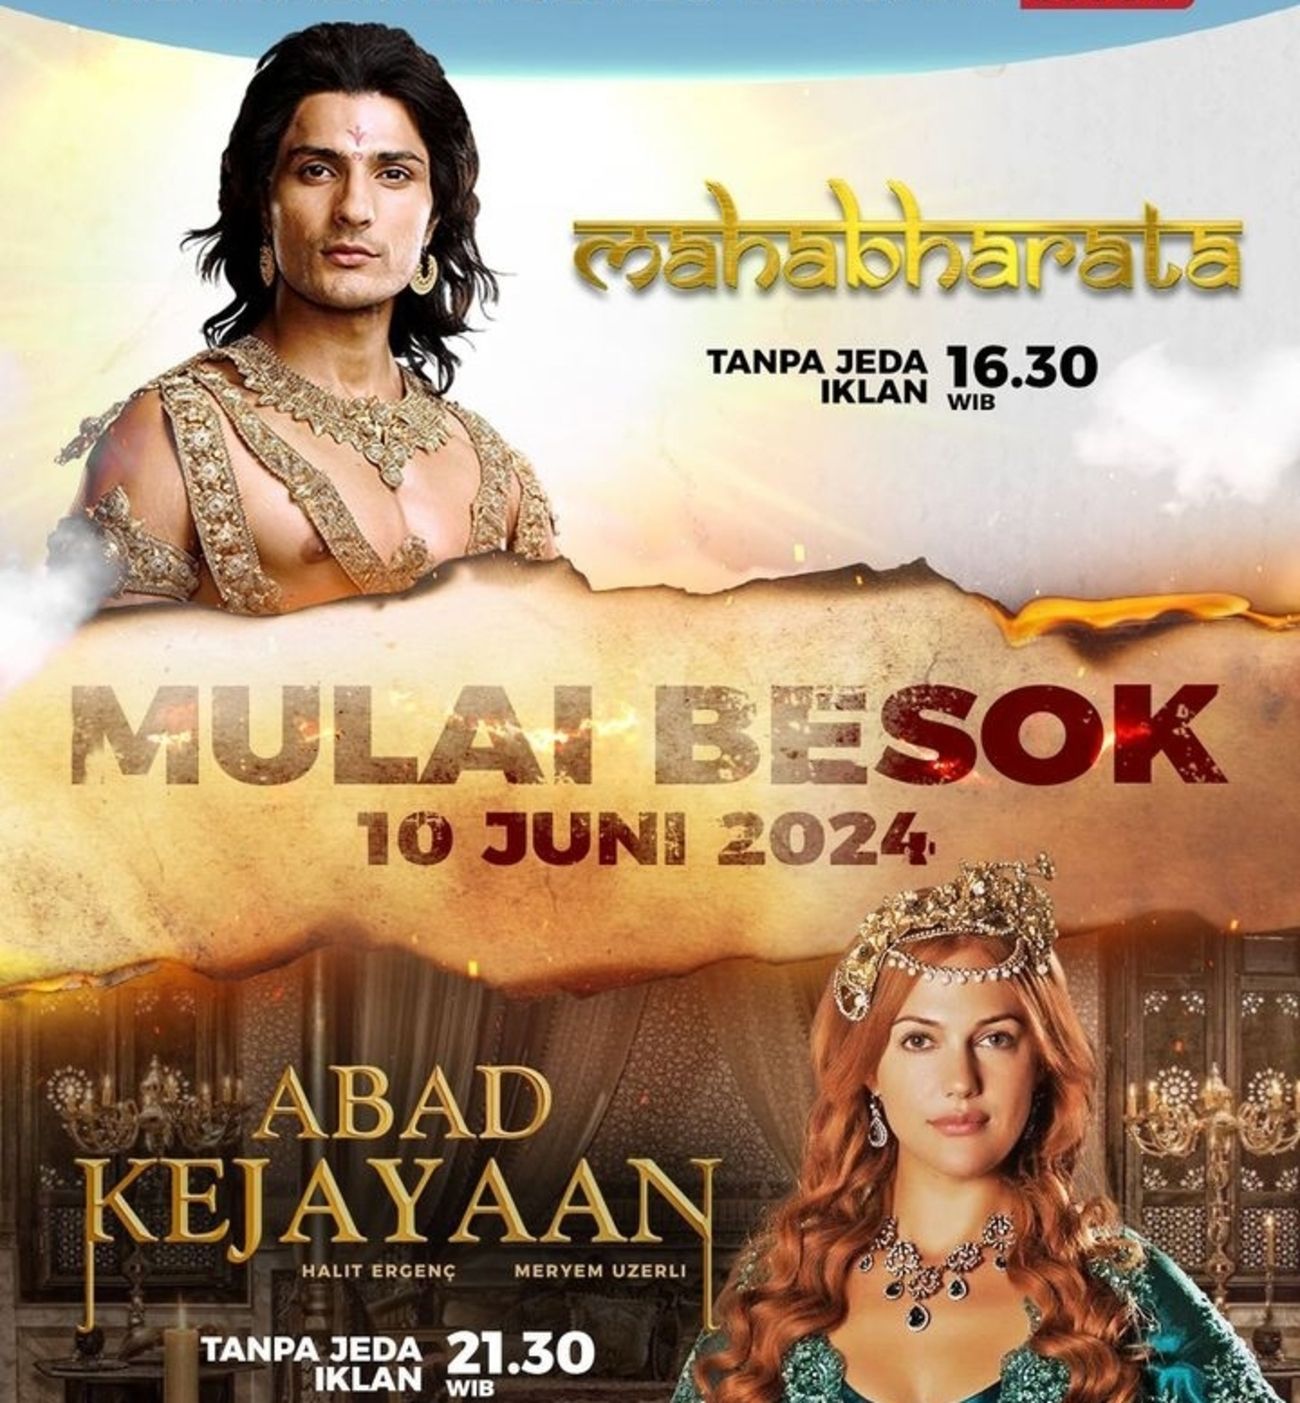 Jadwal ANTV Hari Ini 10 Juni 2024: Saksikan Kembali Mahabharata Hingga Abad Kejayaan Tanpa Jeda Iklan!